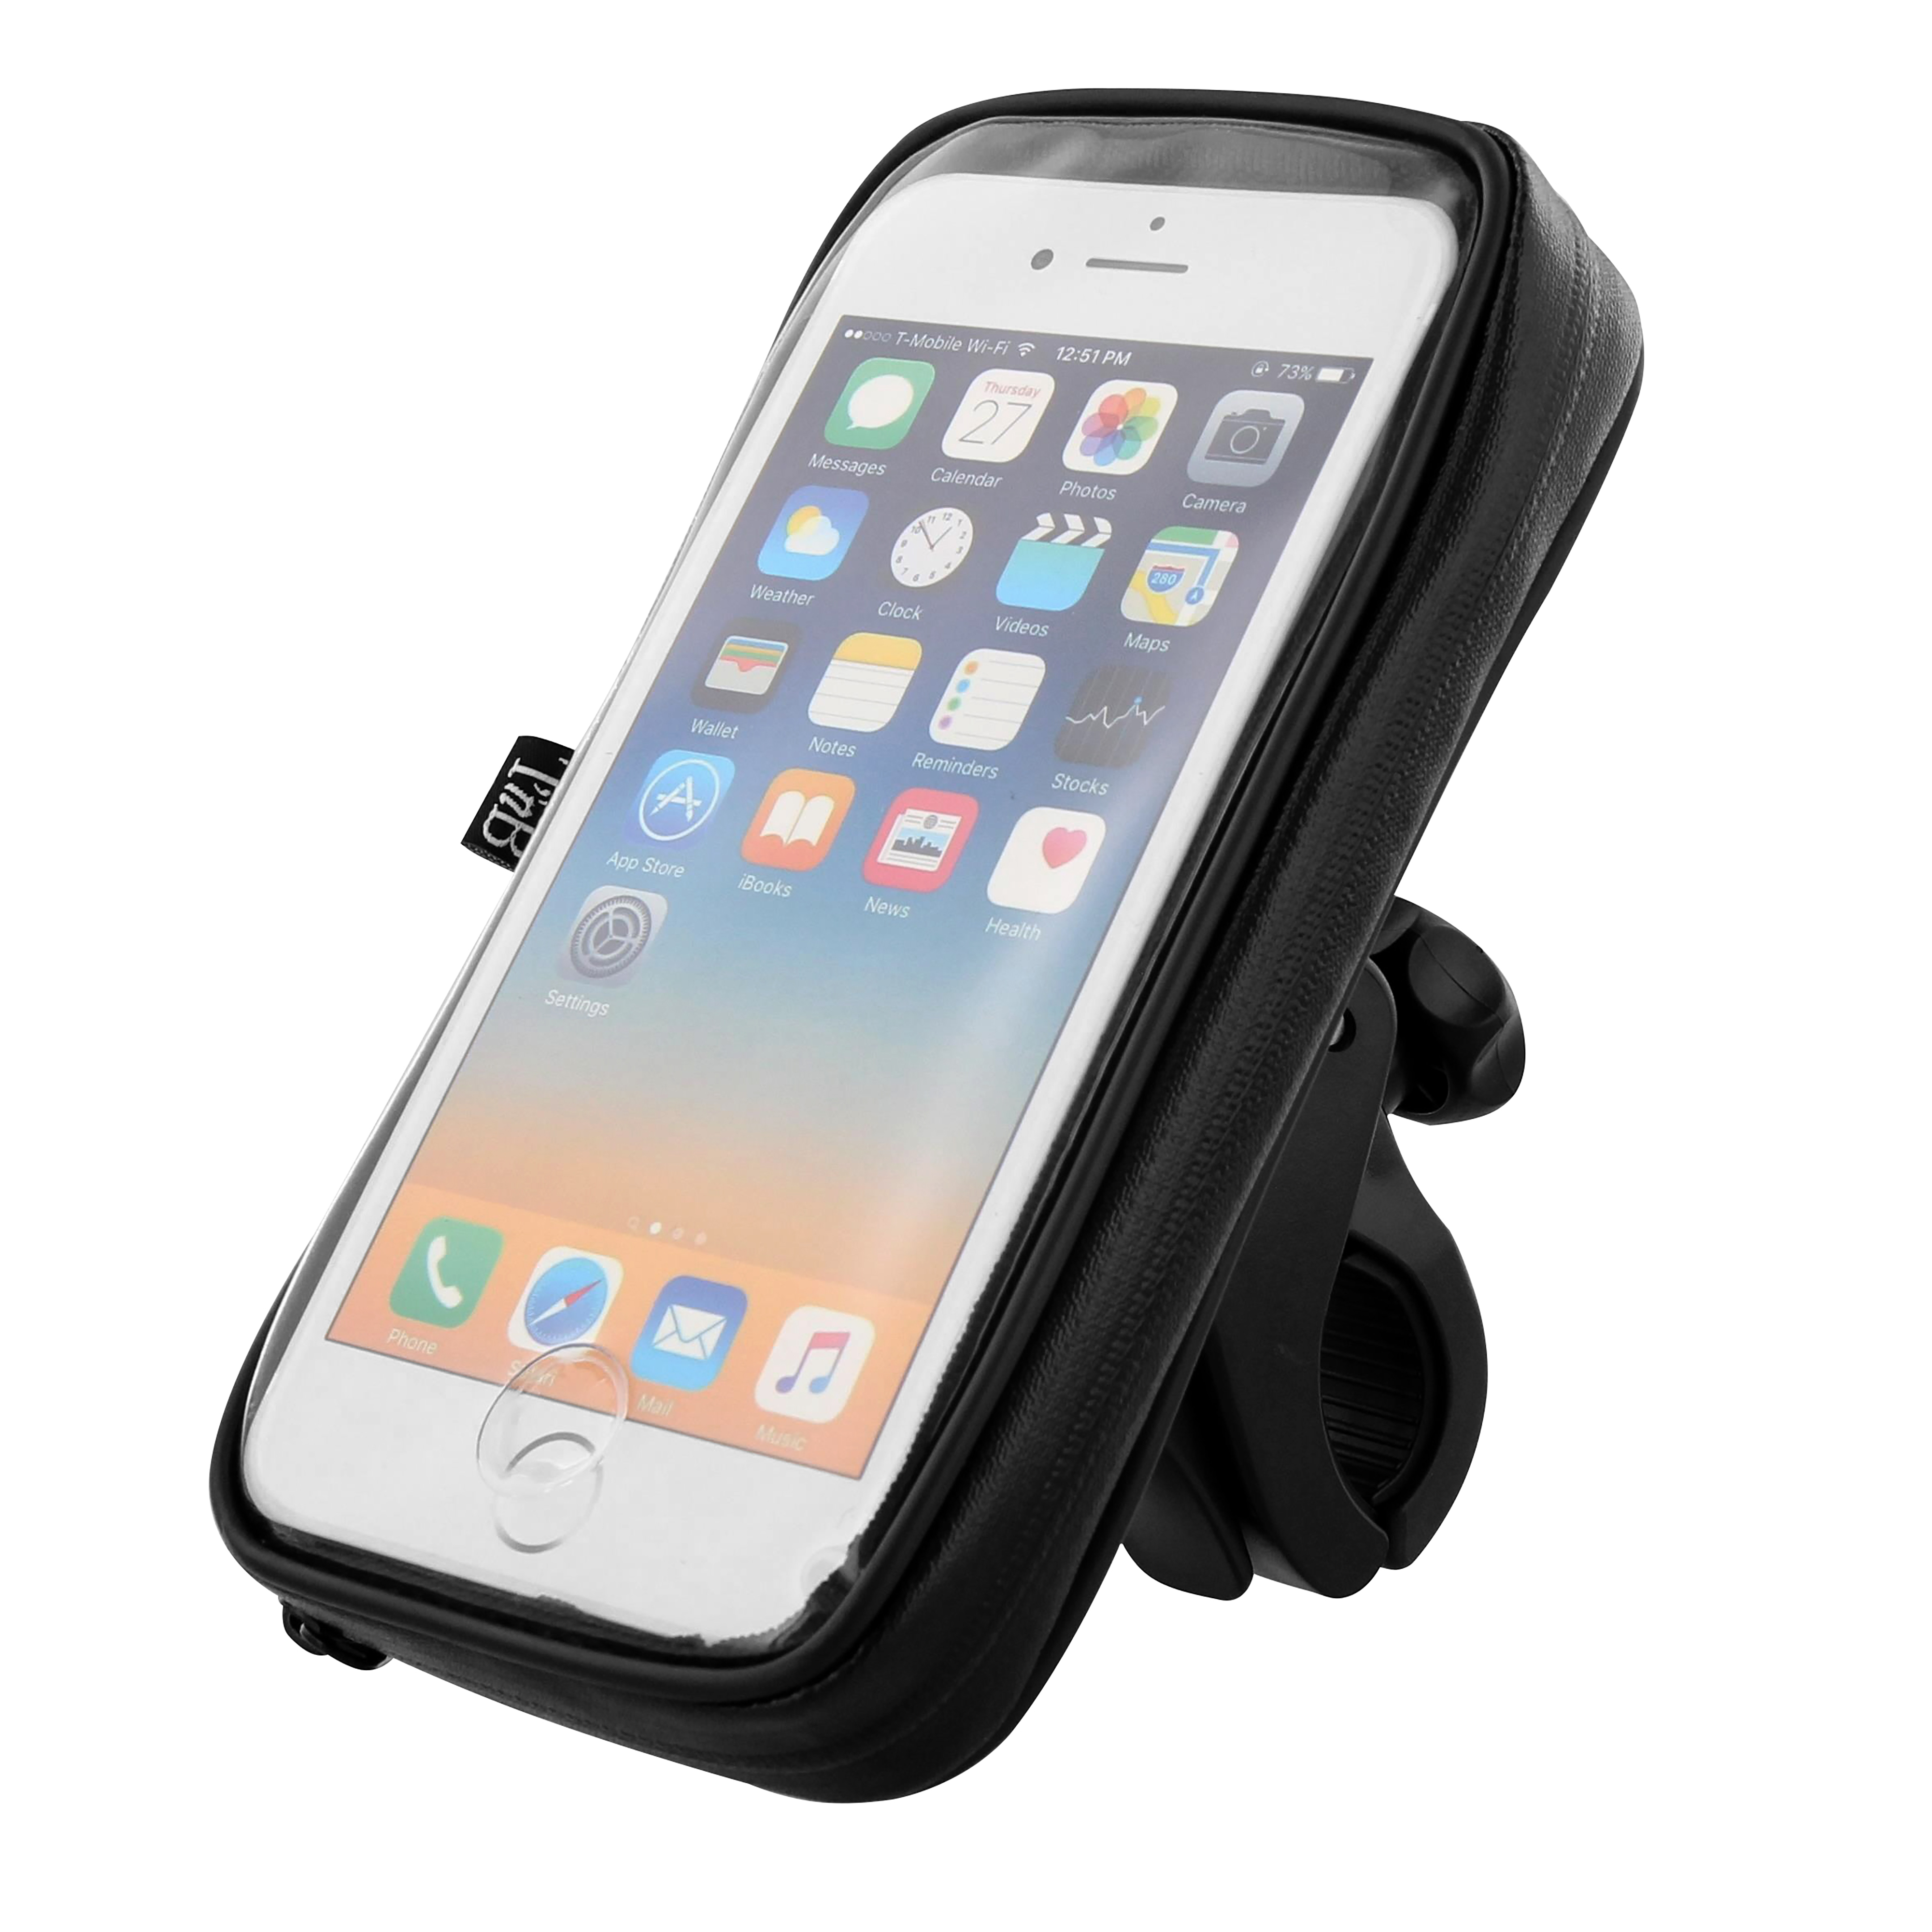 Urban Moov Semi-Rigid Smartphone Holder Case Black for Bike/Sccoter